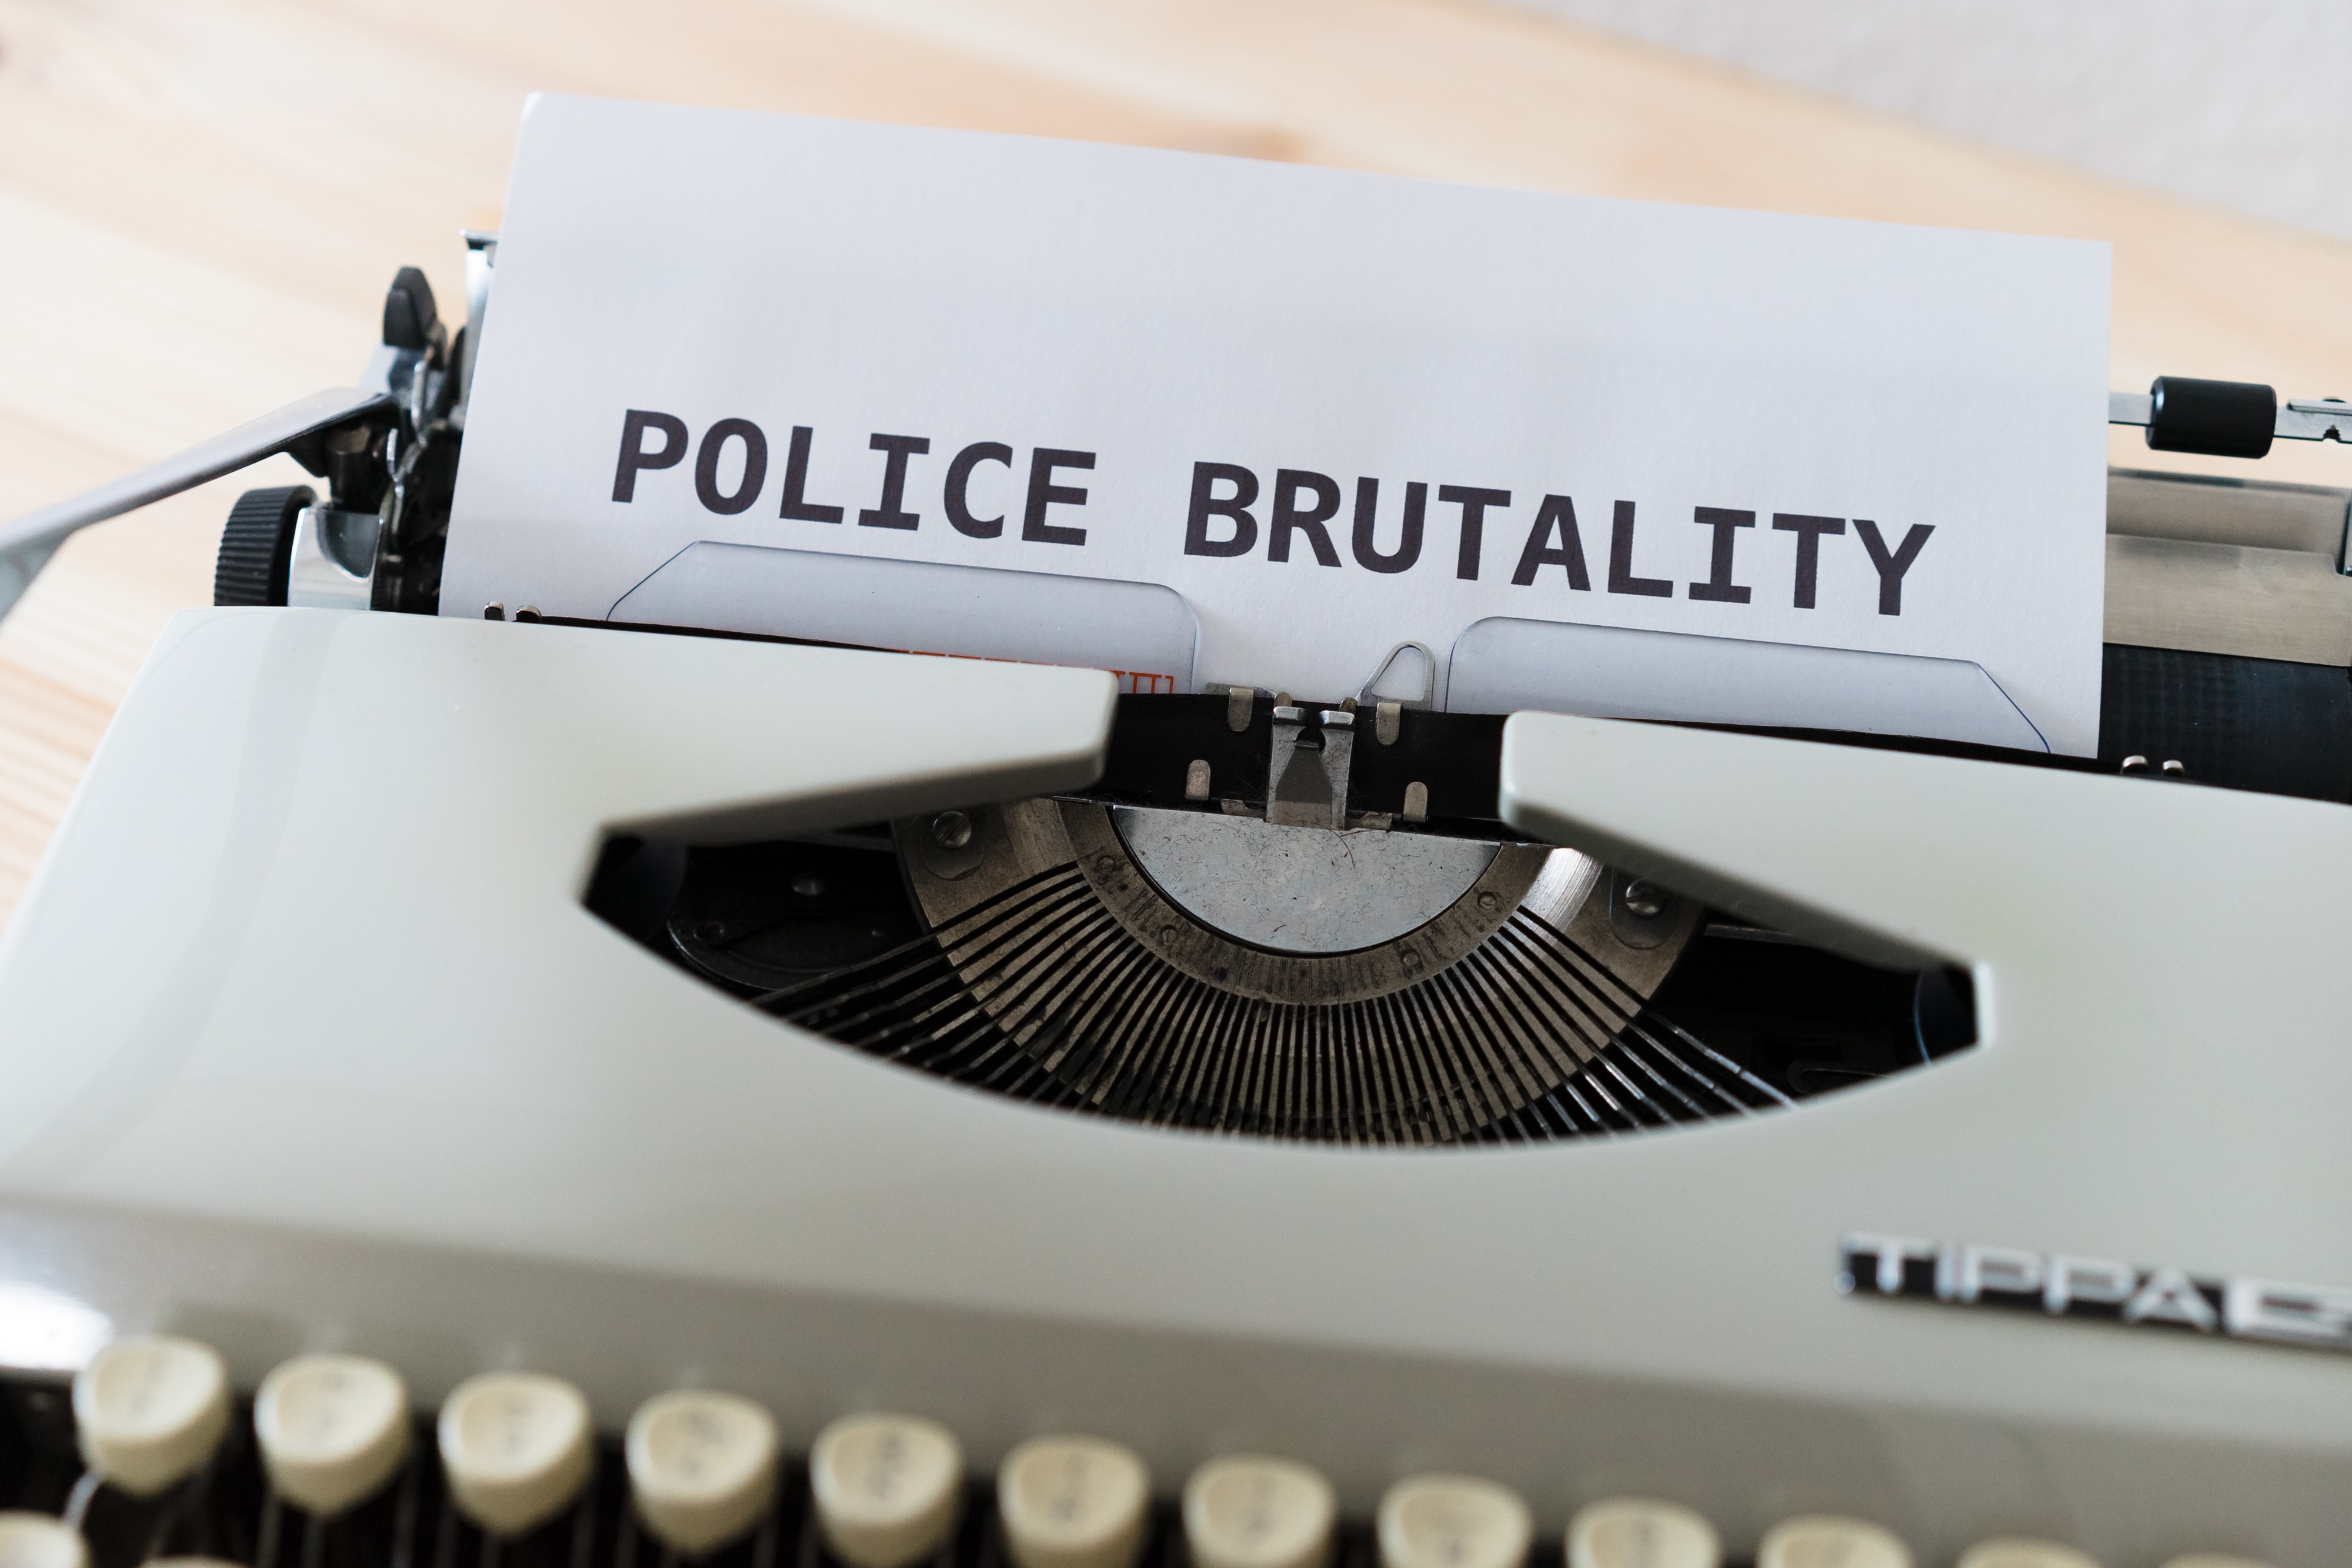 Typewriter with paper saying Police Brutality; image by Markus Winkler, via Unsplash.com.